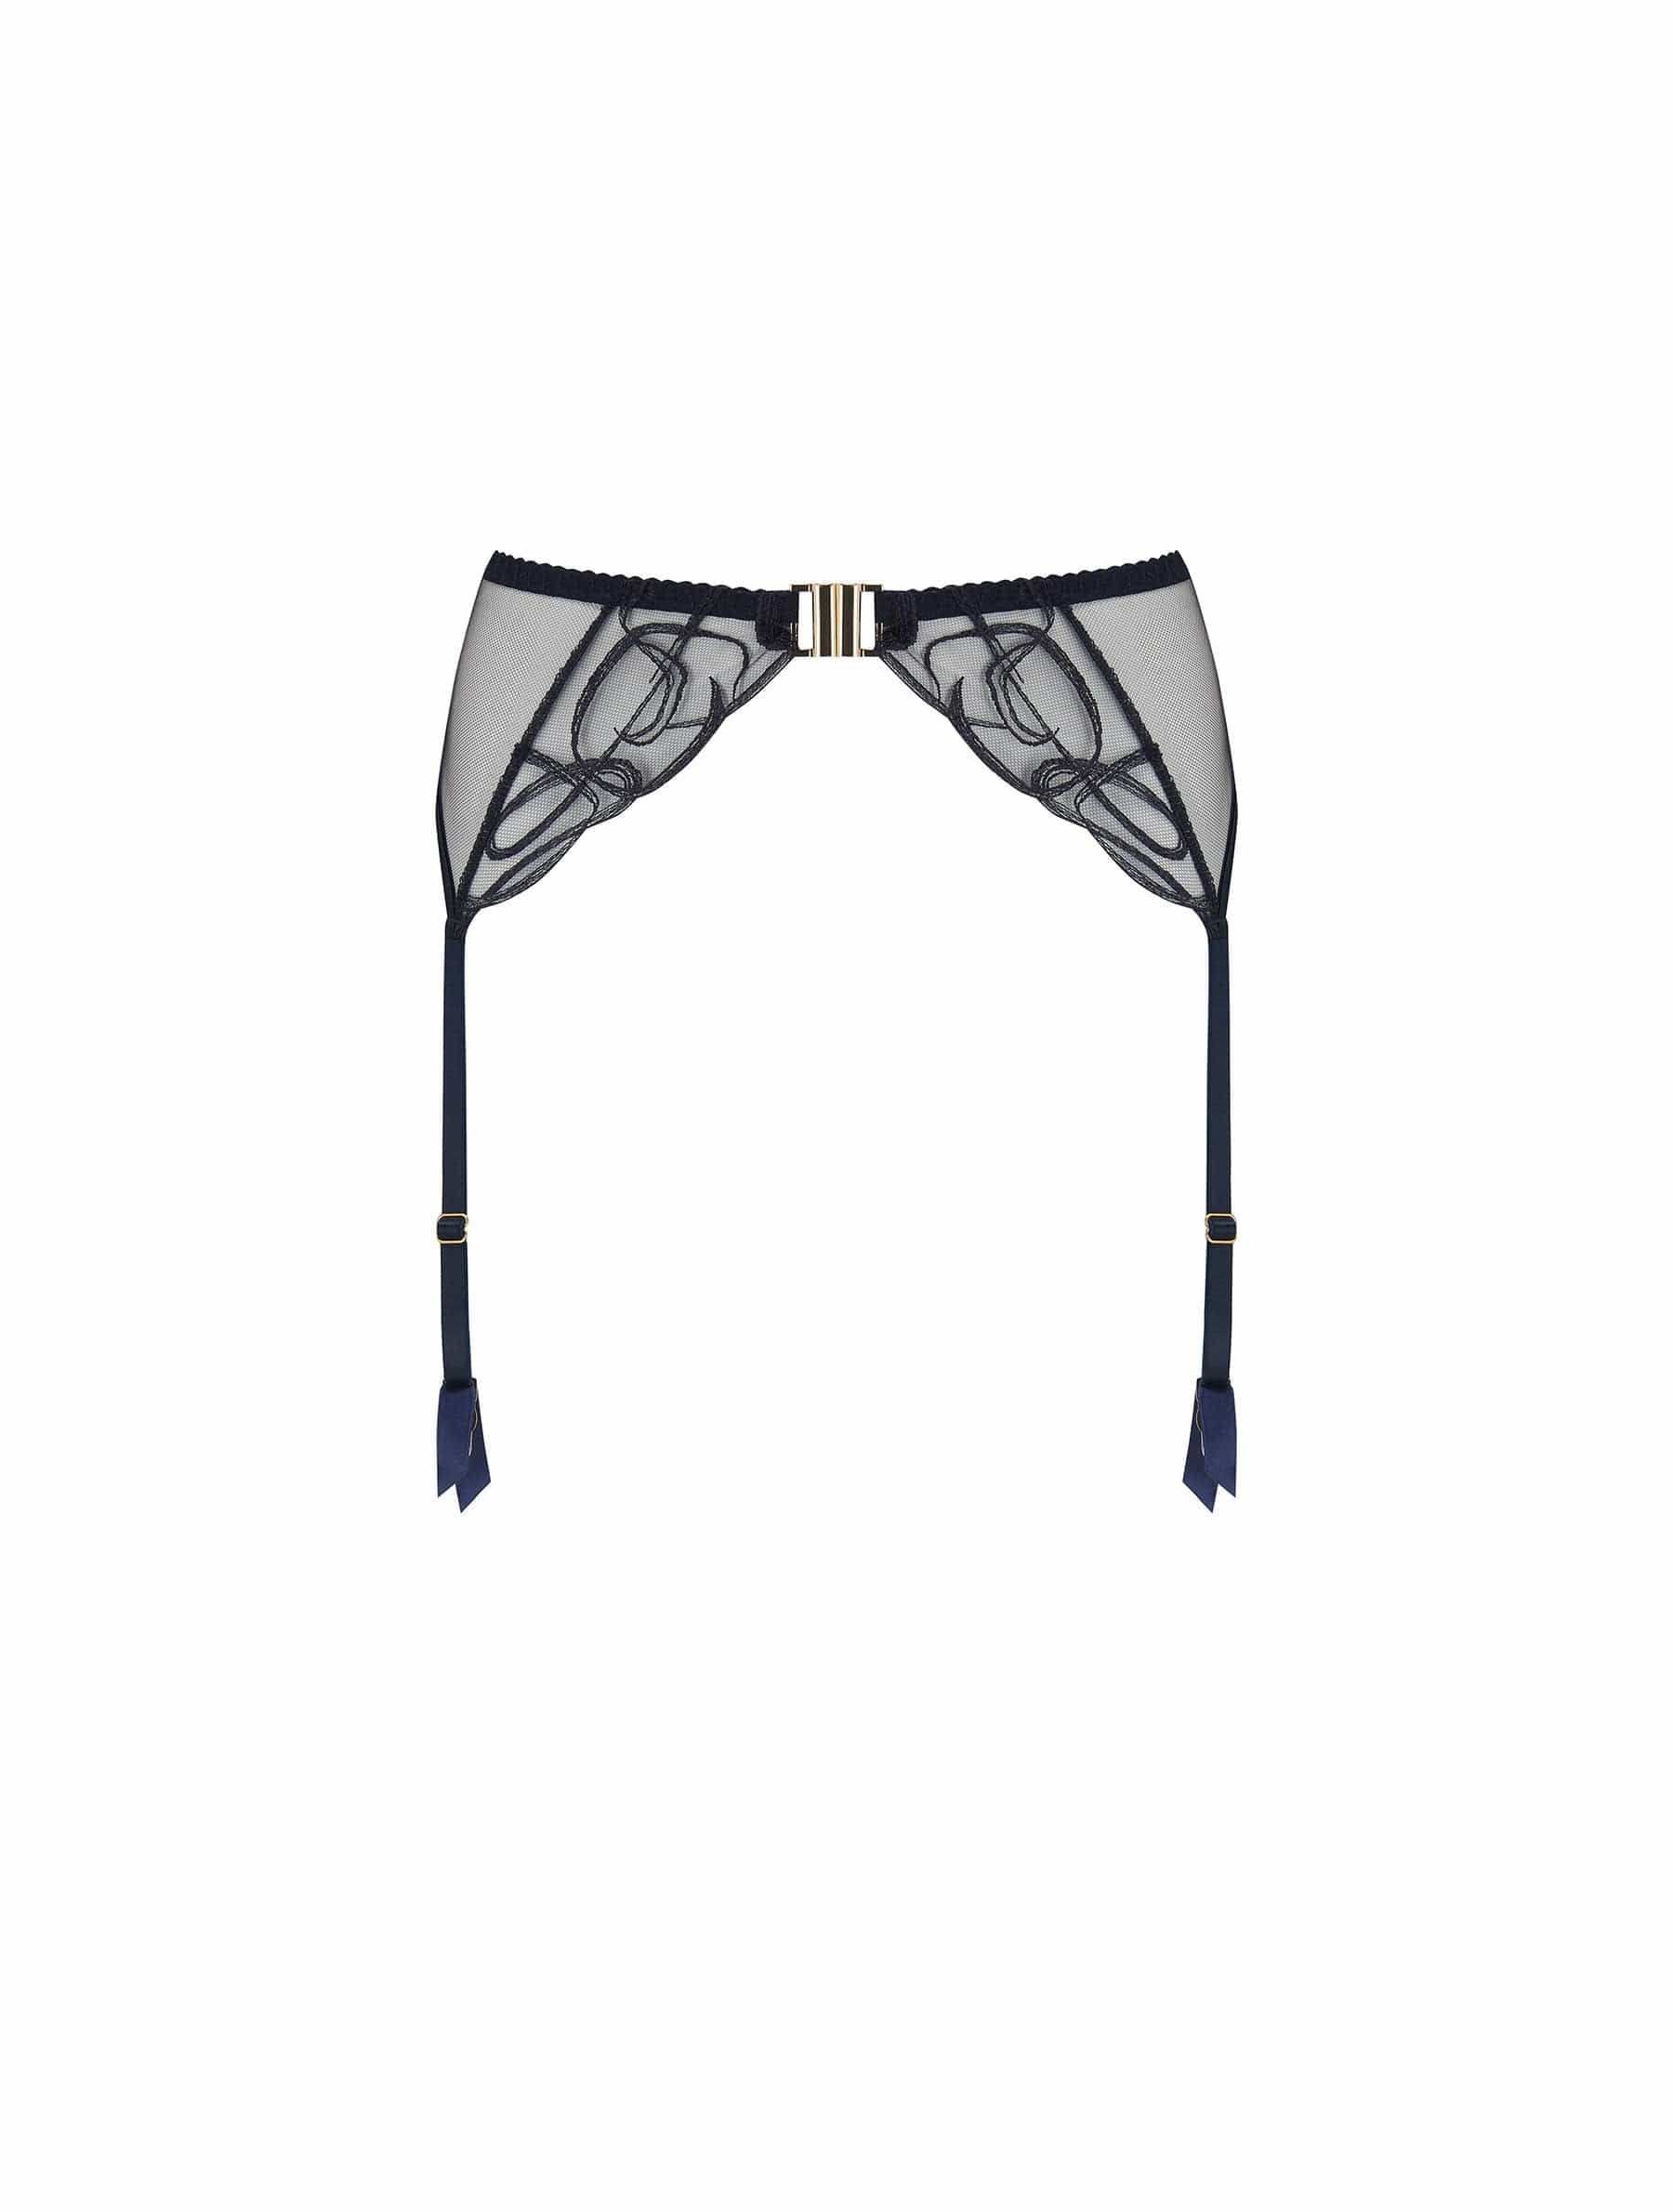 14 Strap Luxury All Lace Suspender Belt Black (Garter Belt) NYLONZ Made In  UK 